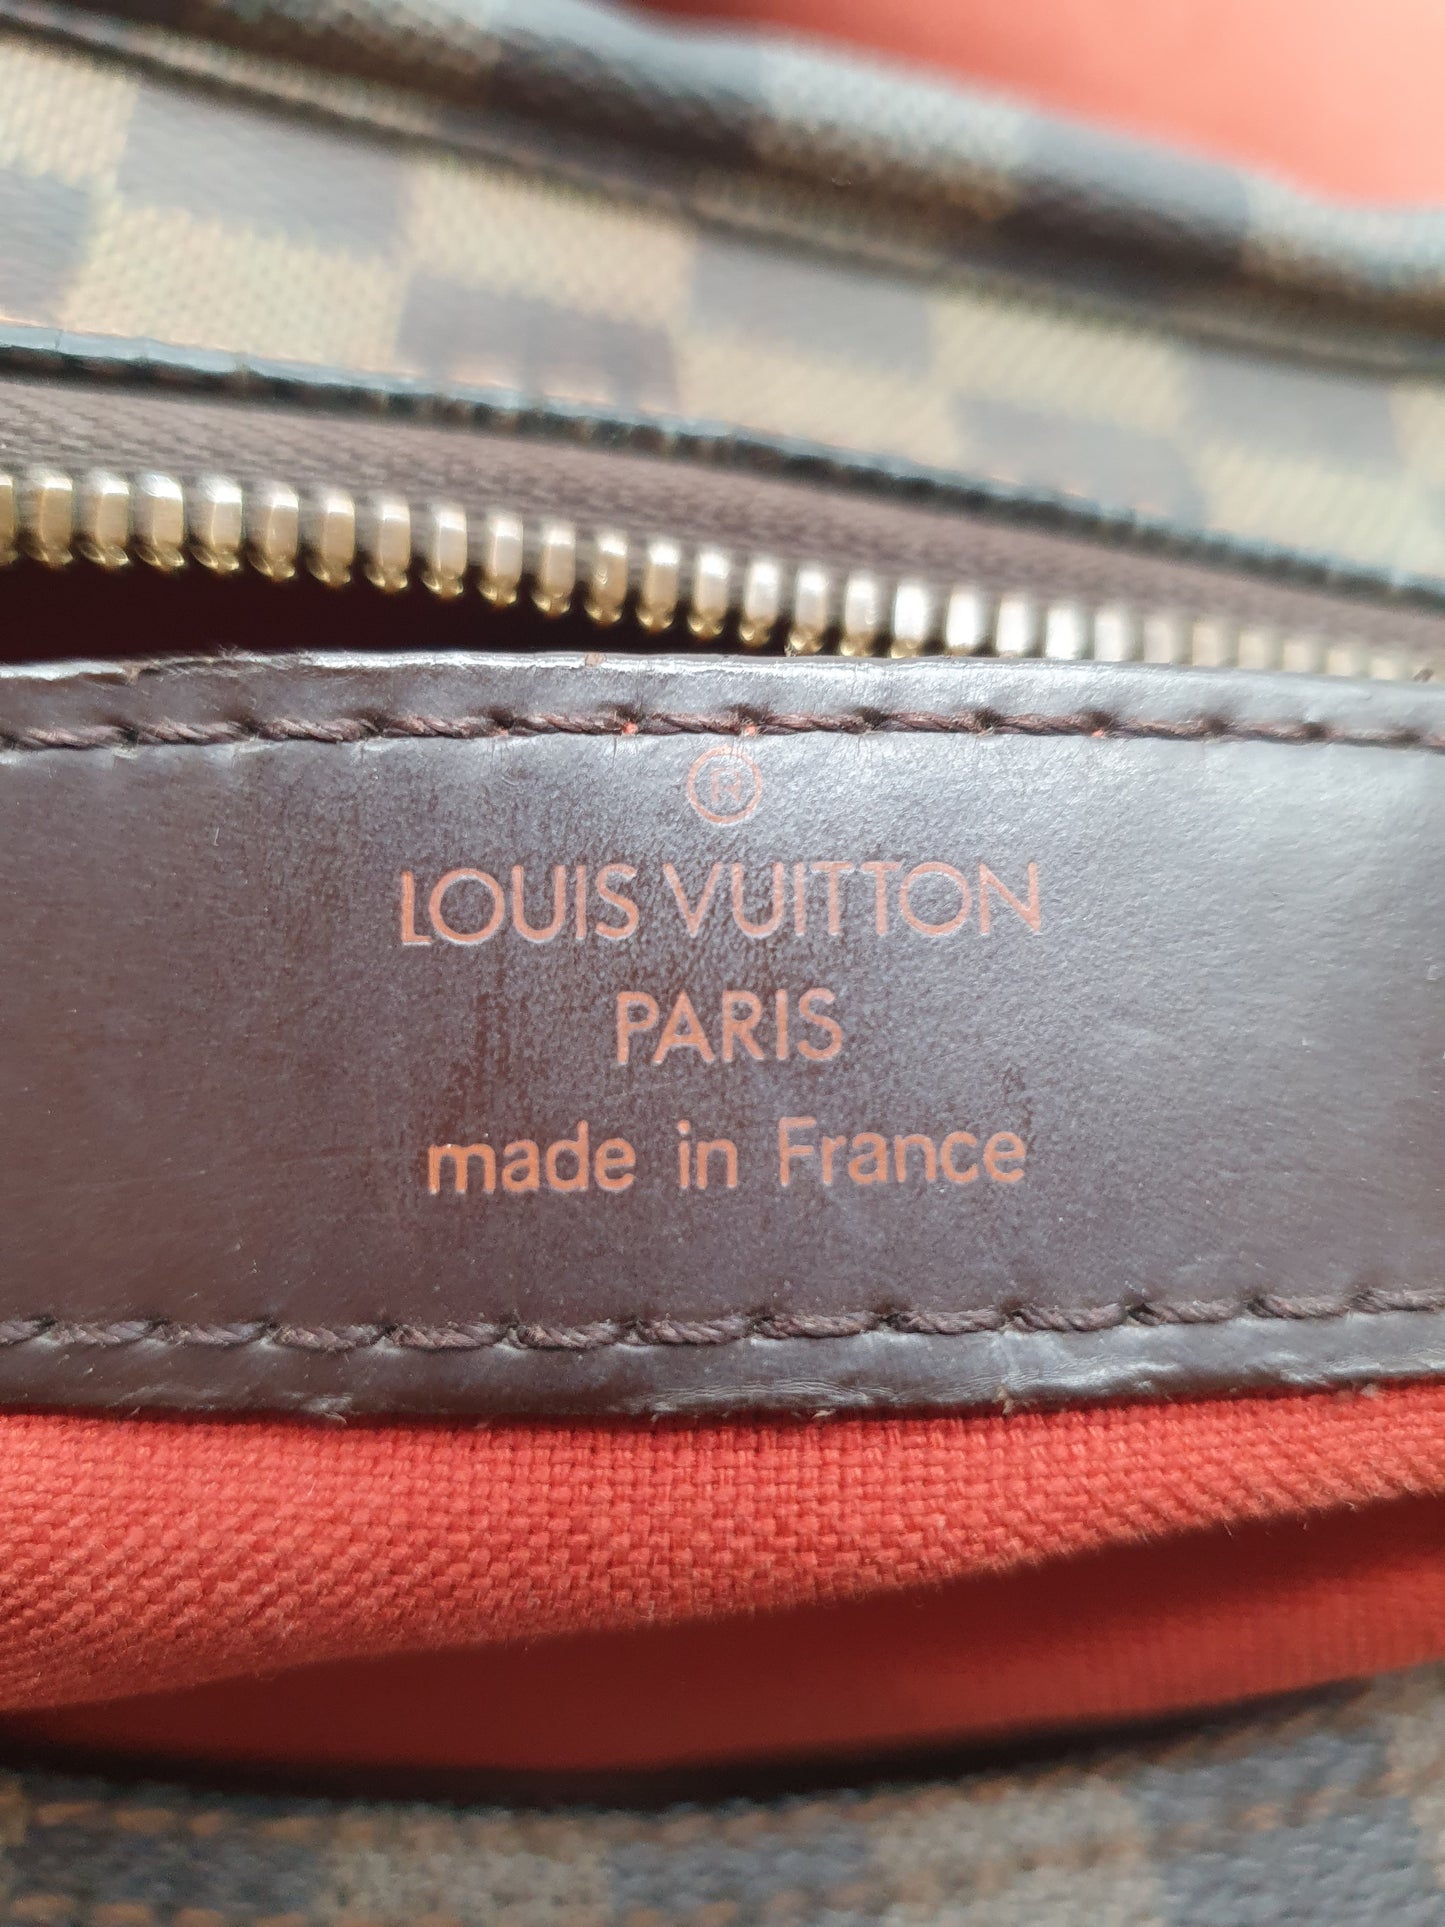 Louis vuitton messenger bag